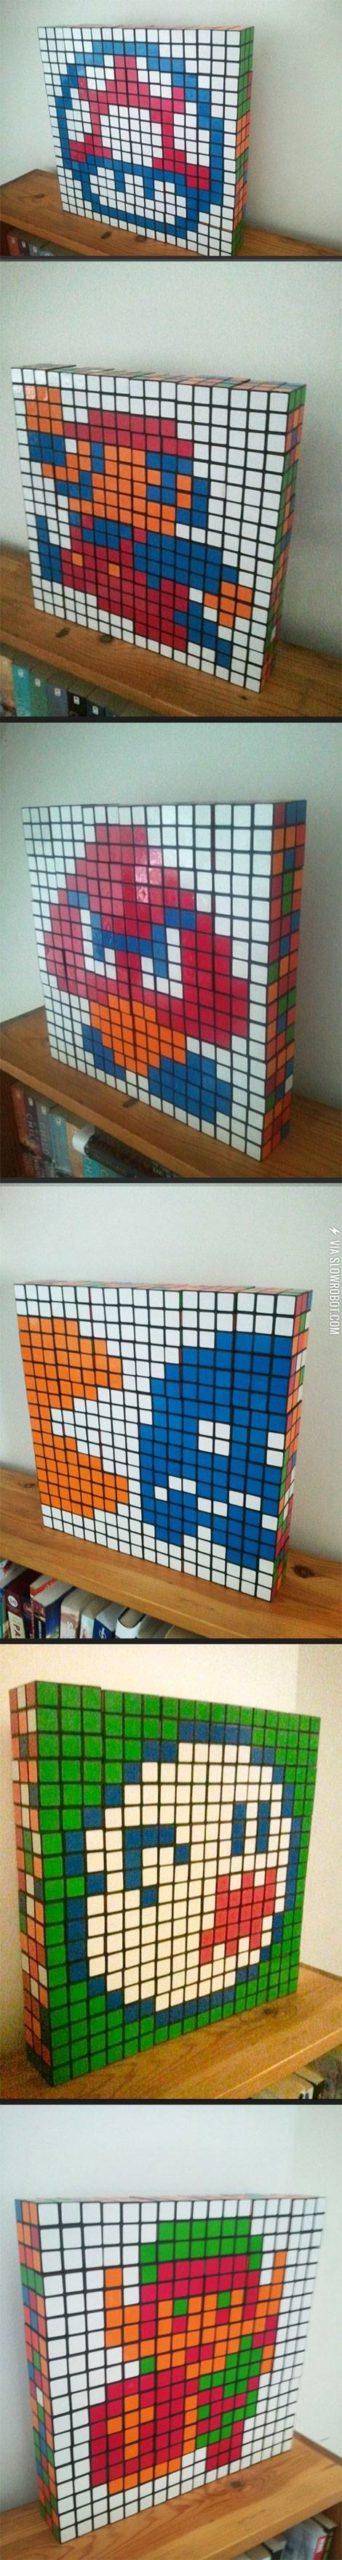 Rubik%26%238217%3Bs+Cube+art.